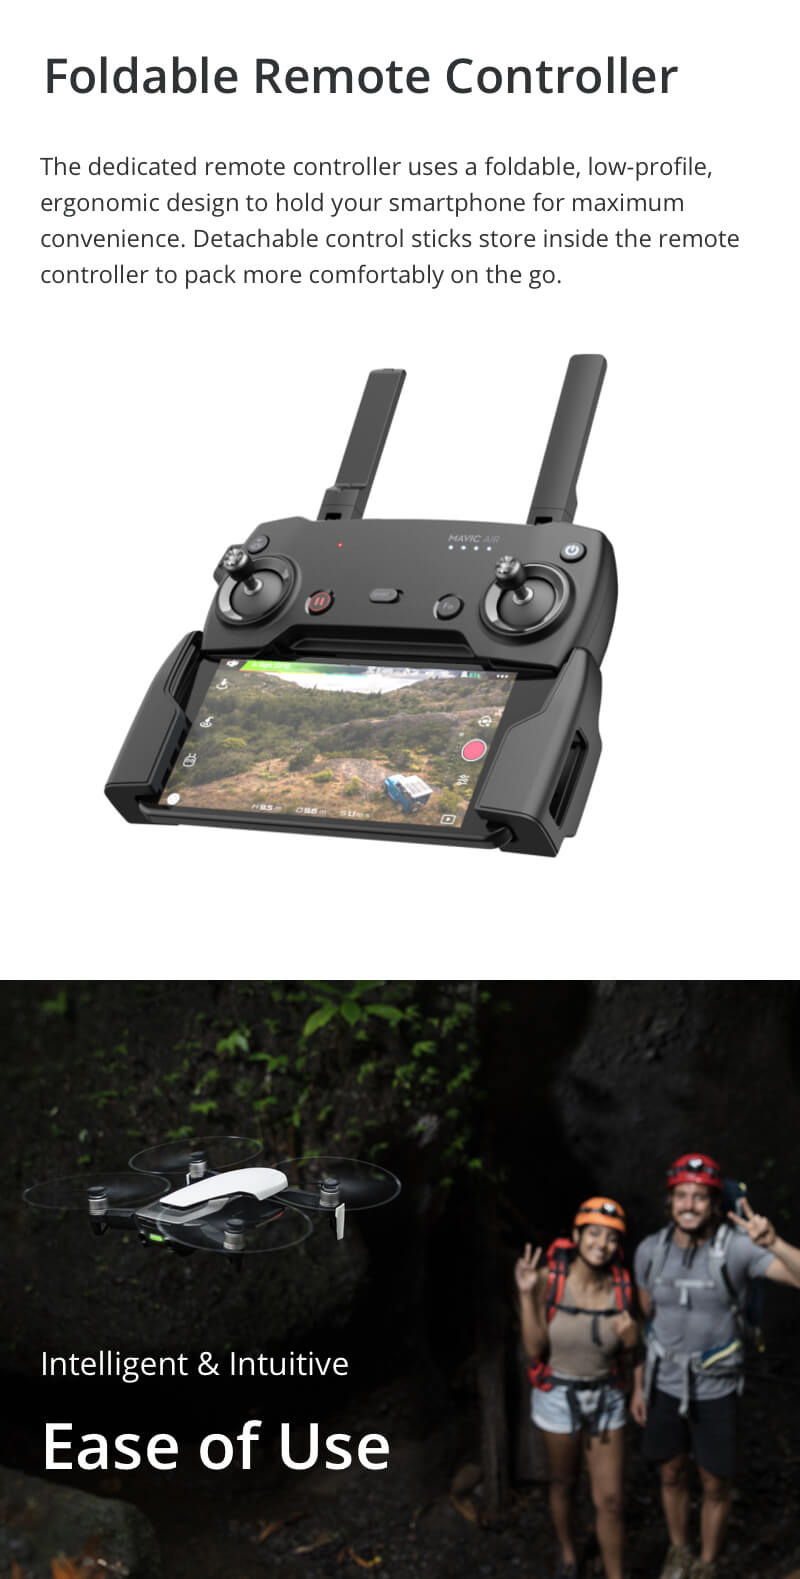 DJI Mavic Air 4K 3-Axis Gimbal Camera 32MP Sphere Panoramas Foldable RC Drone Fly More Combo - Onyx Black